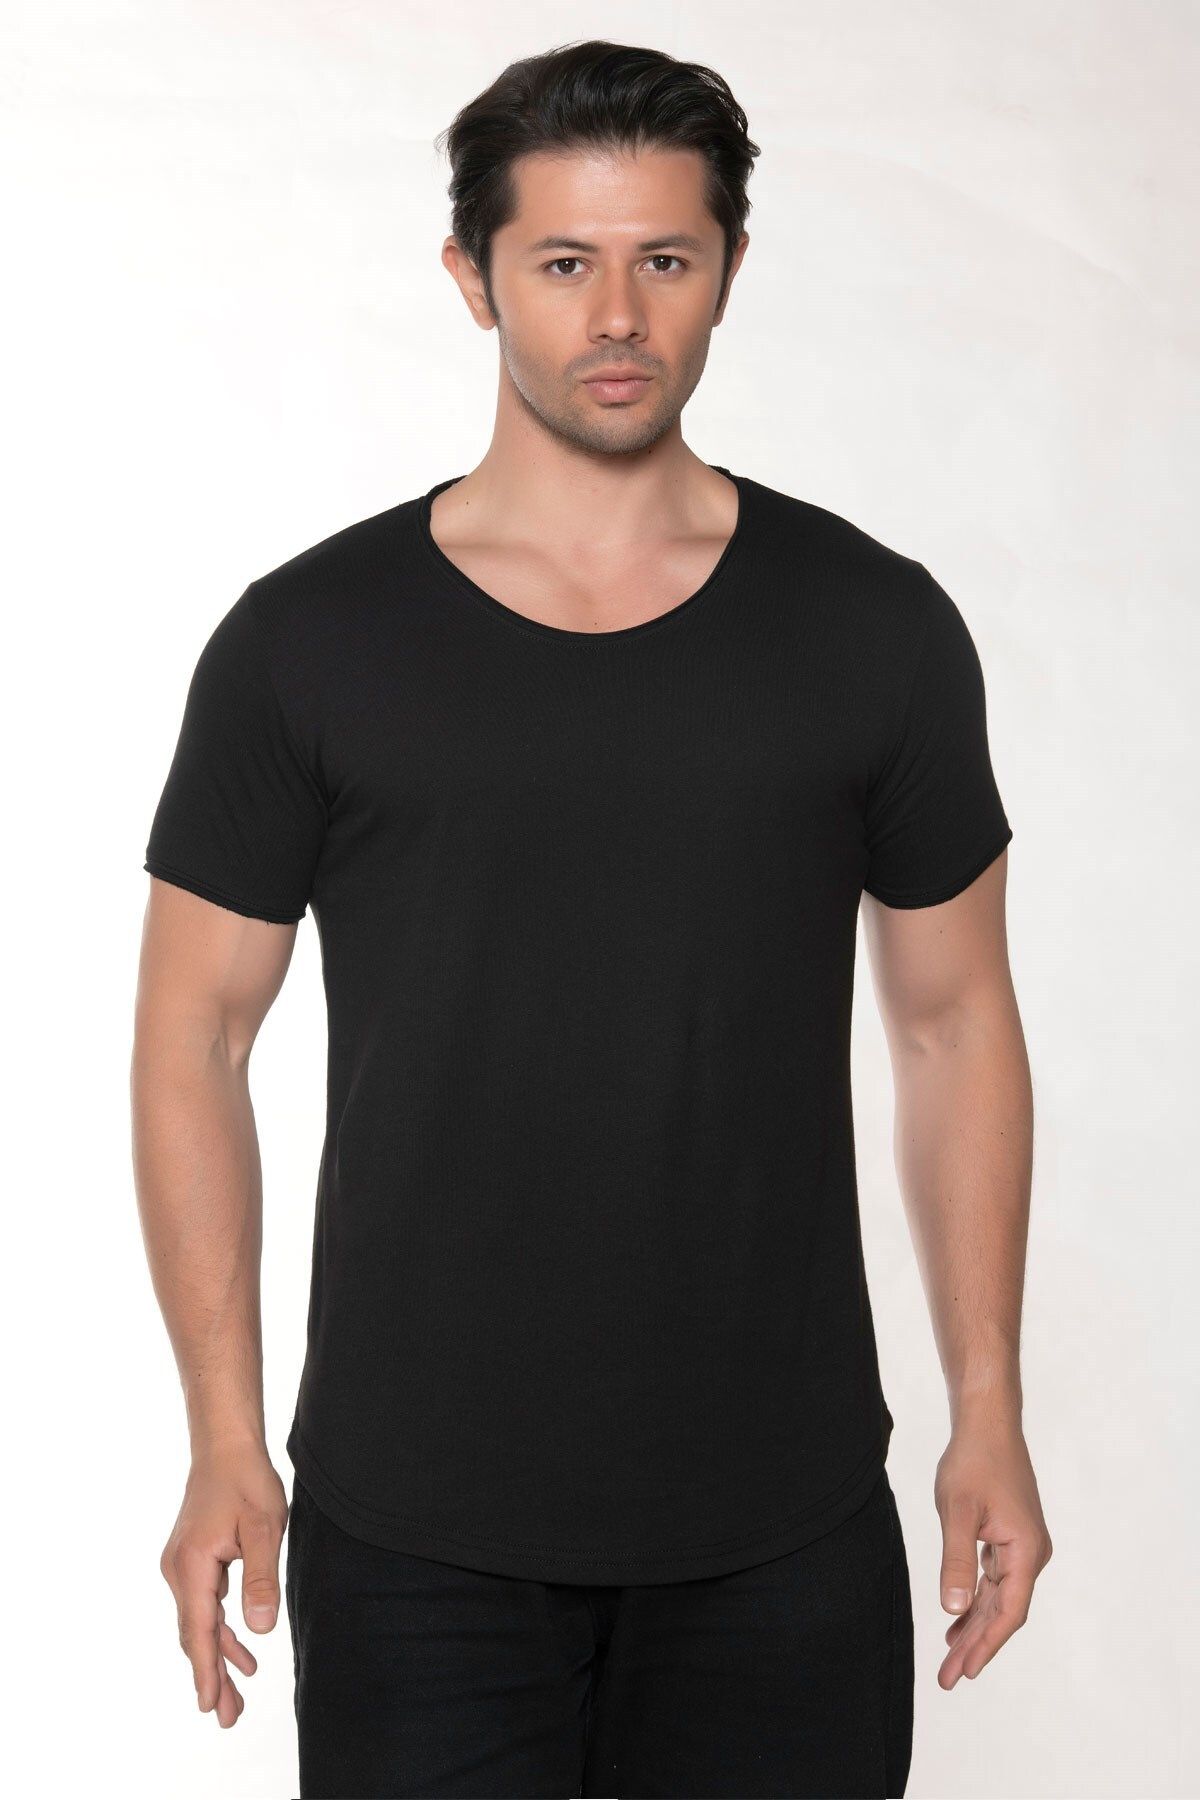 BlackHorn Black Horn Erkek Pis Yaka %100 Pamuk Salaş T-shirt